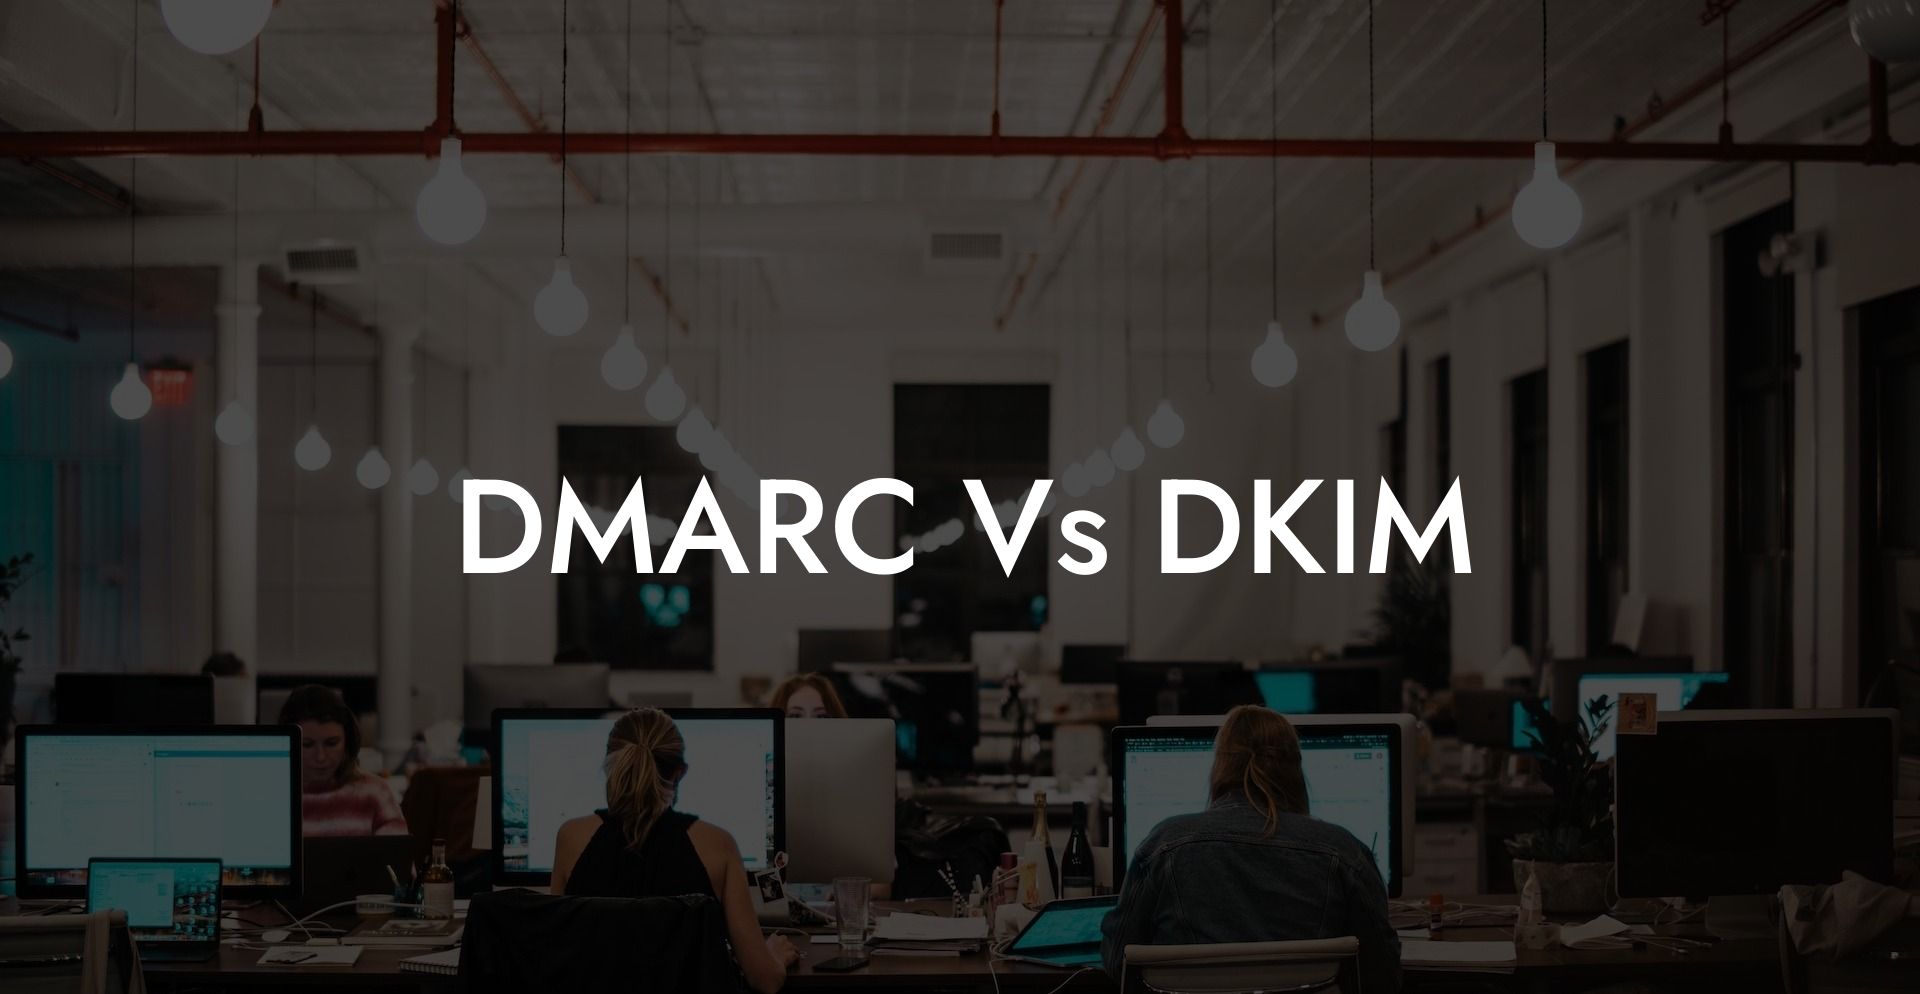 DMARC Vs DKIM